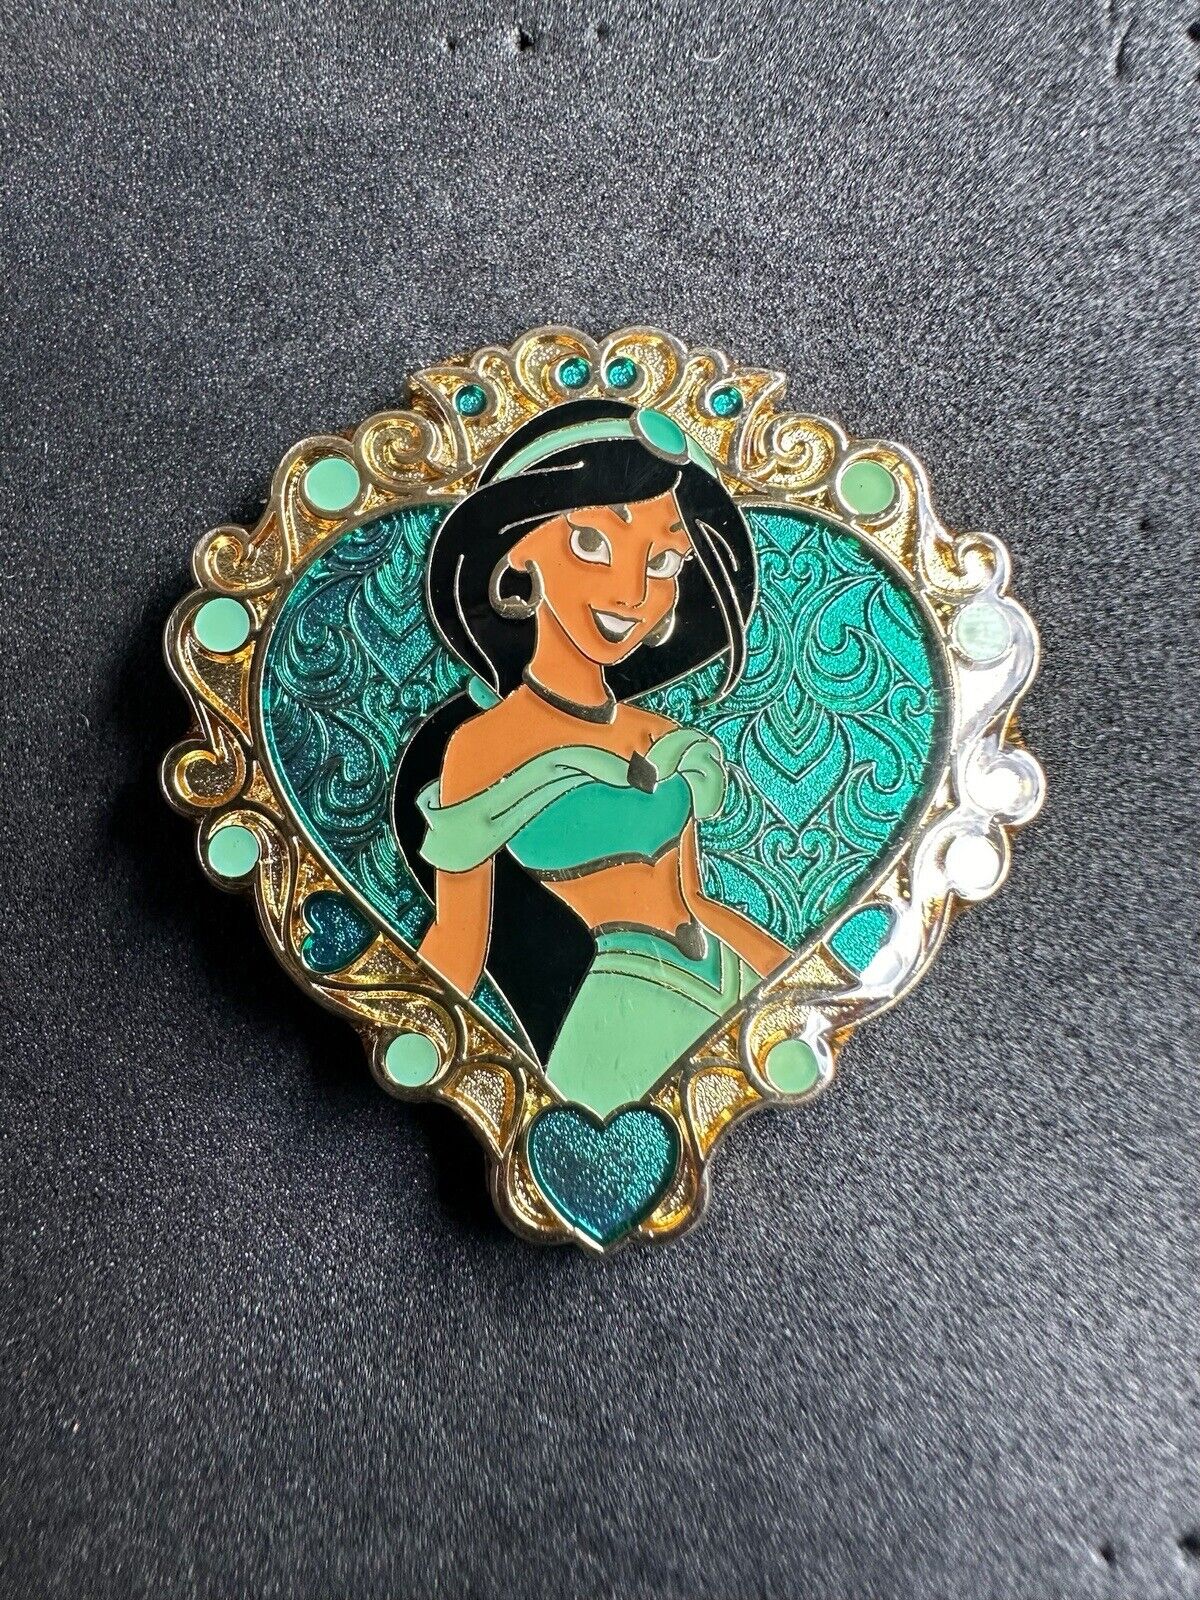 Princess Jasmine Storybook Heart Booster Pack Disney Pin